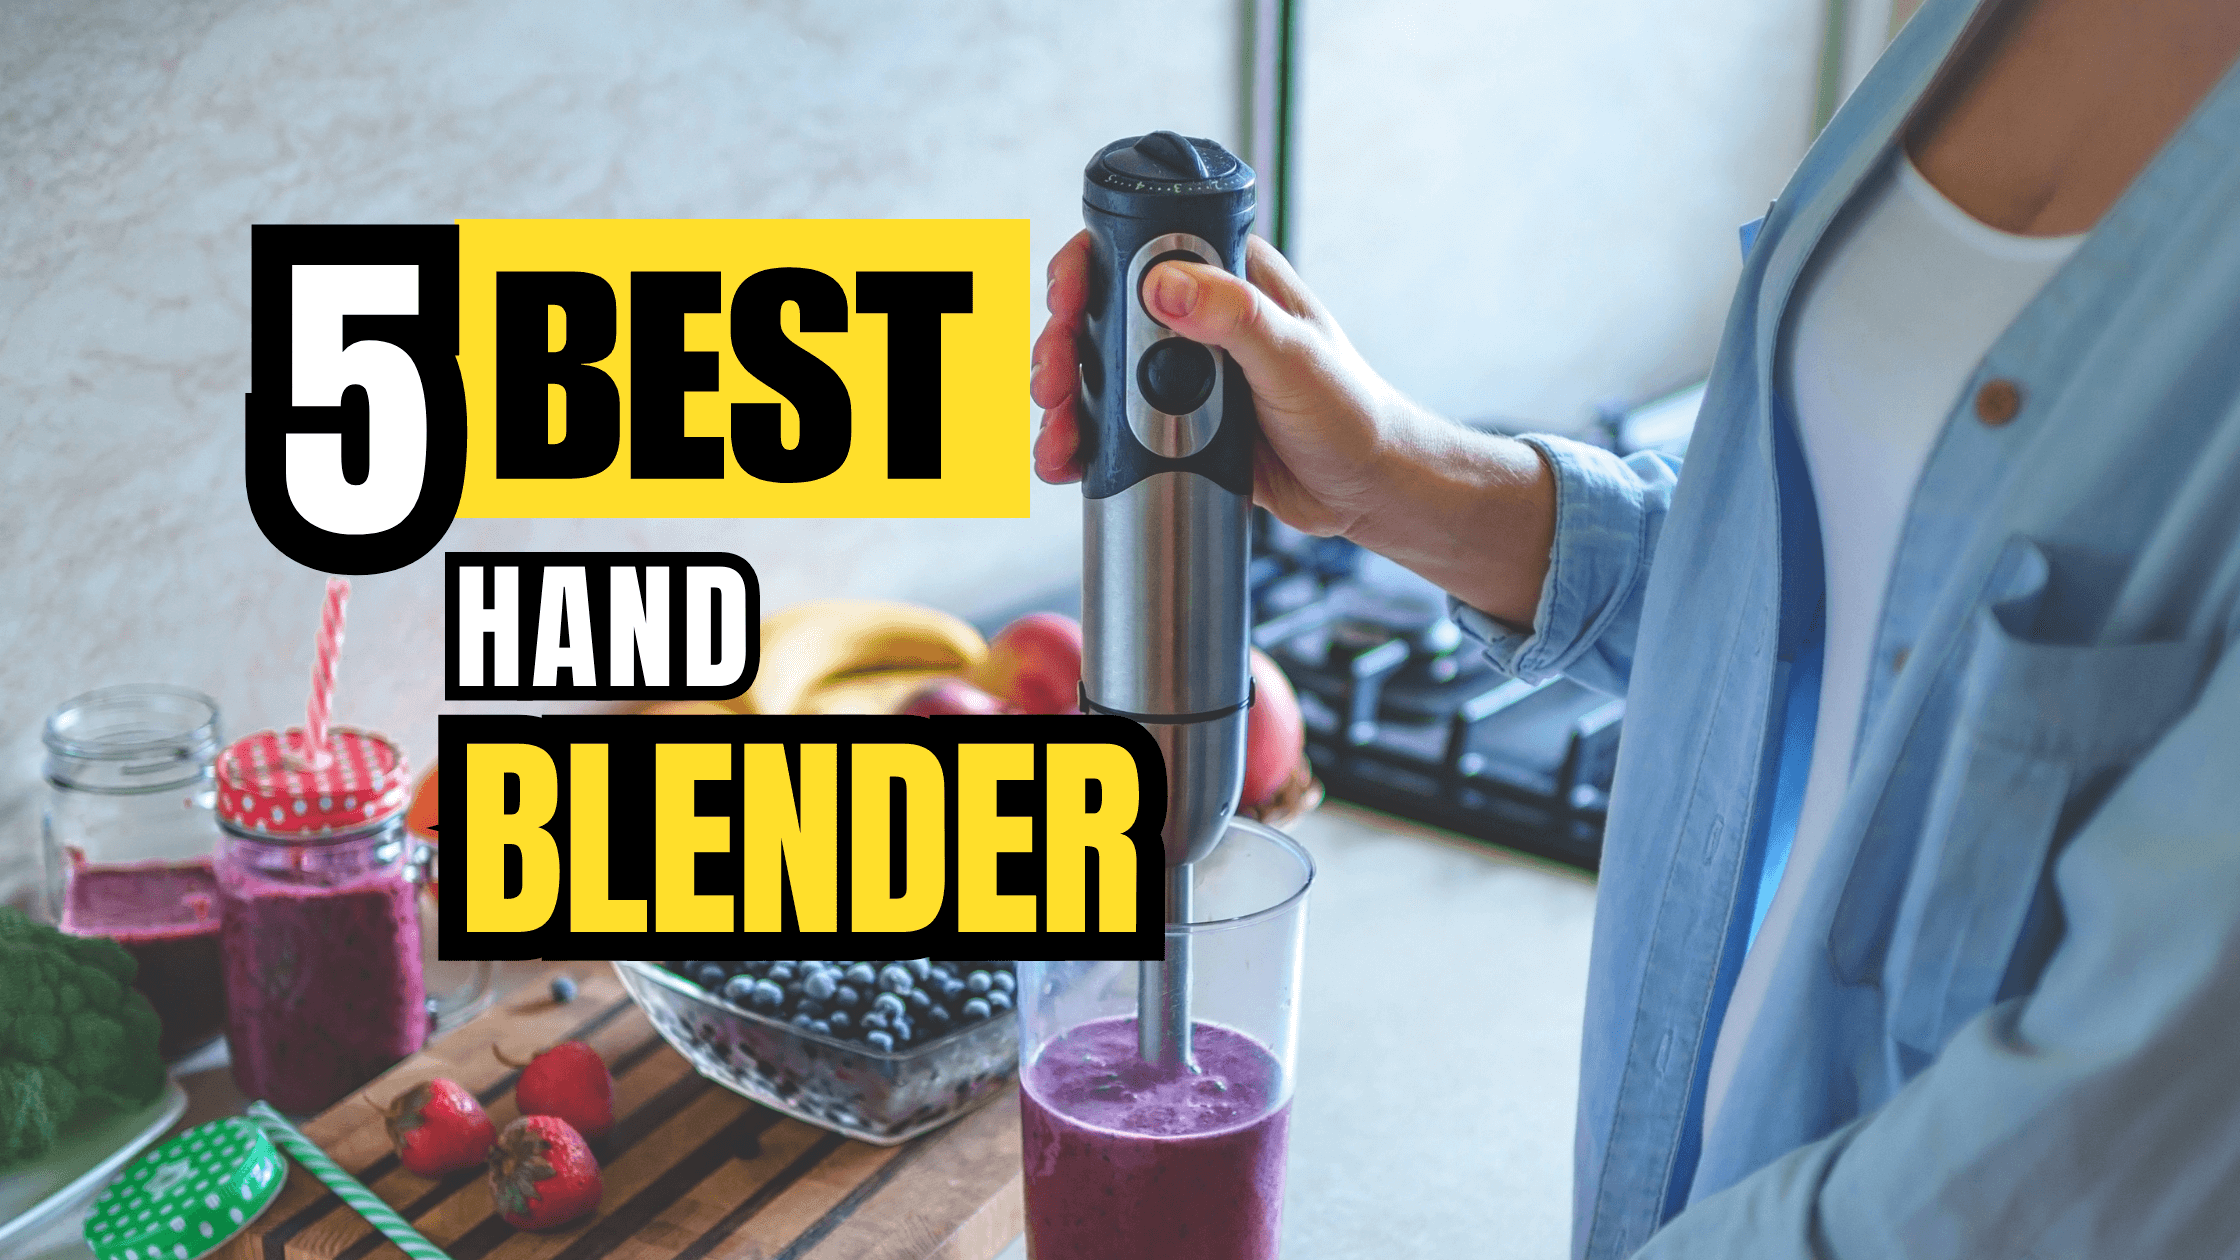 5 Best Hand Blender in India